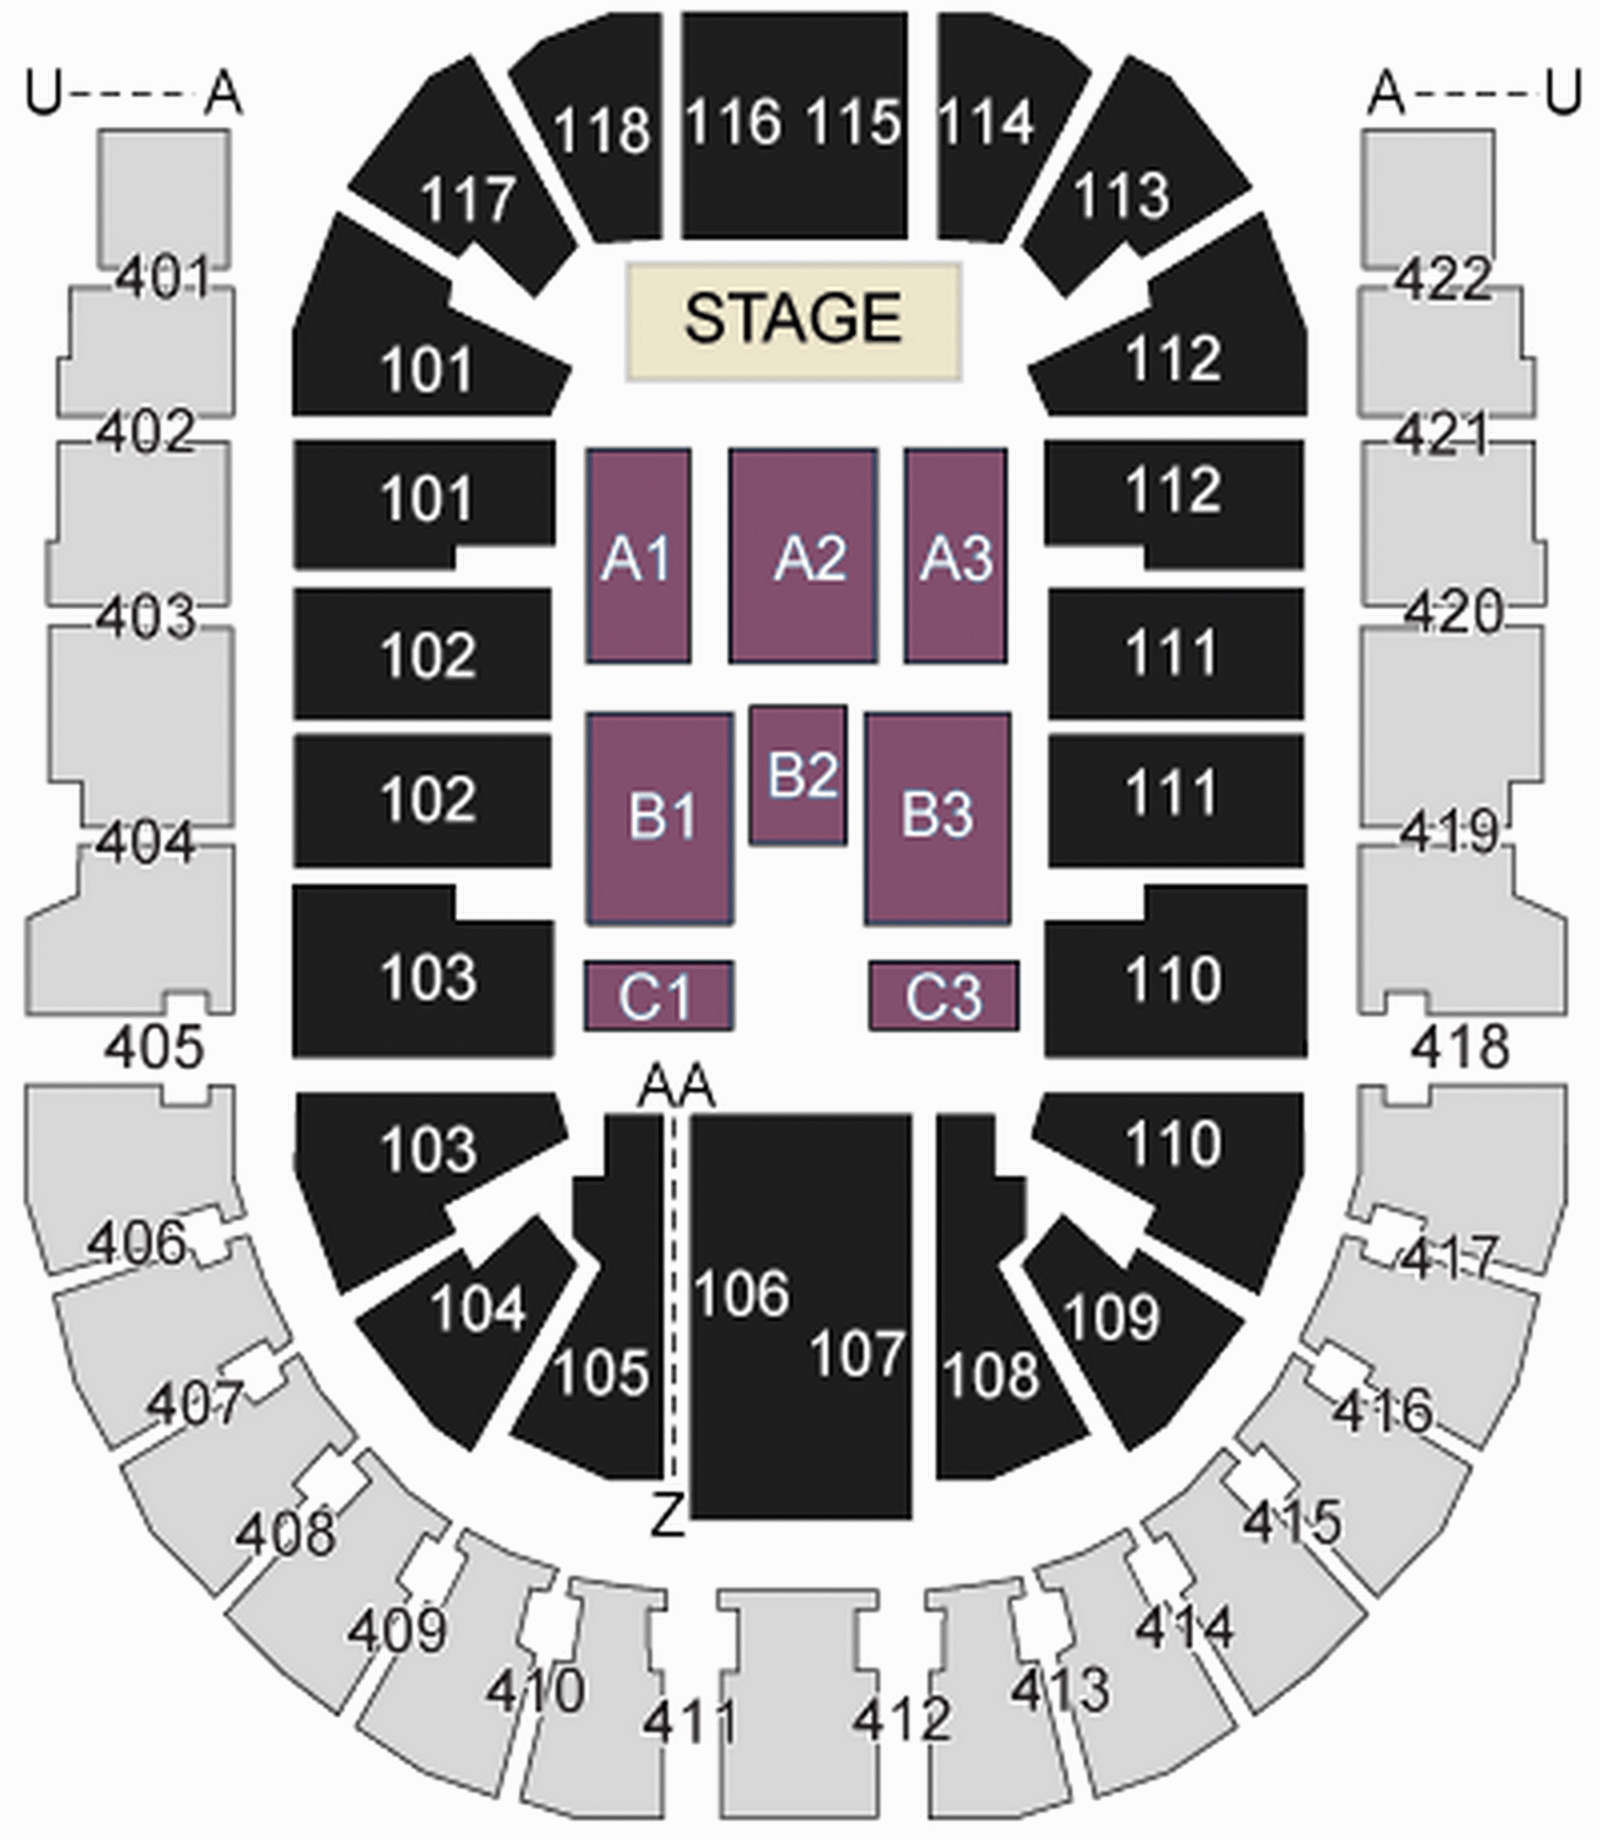 The O2 Arena London seating plan All blocks